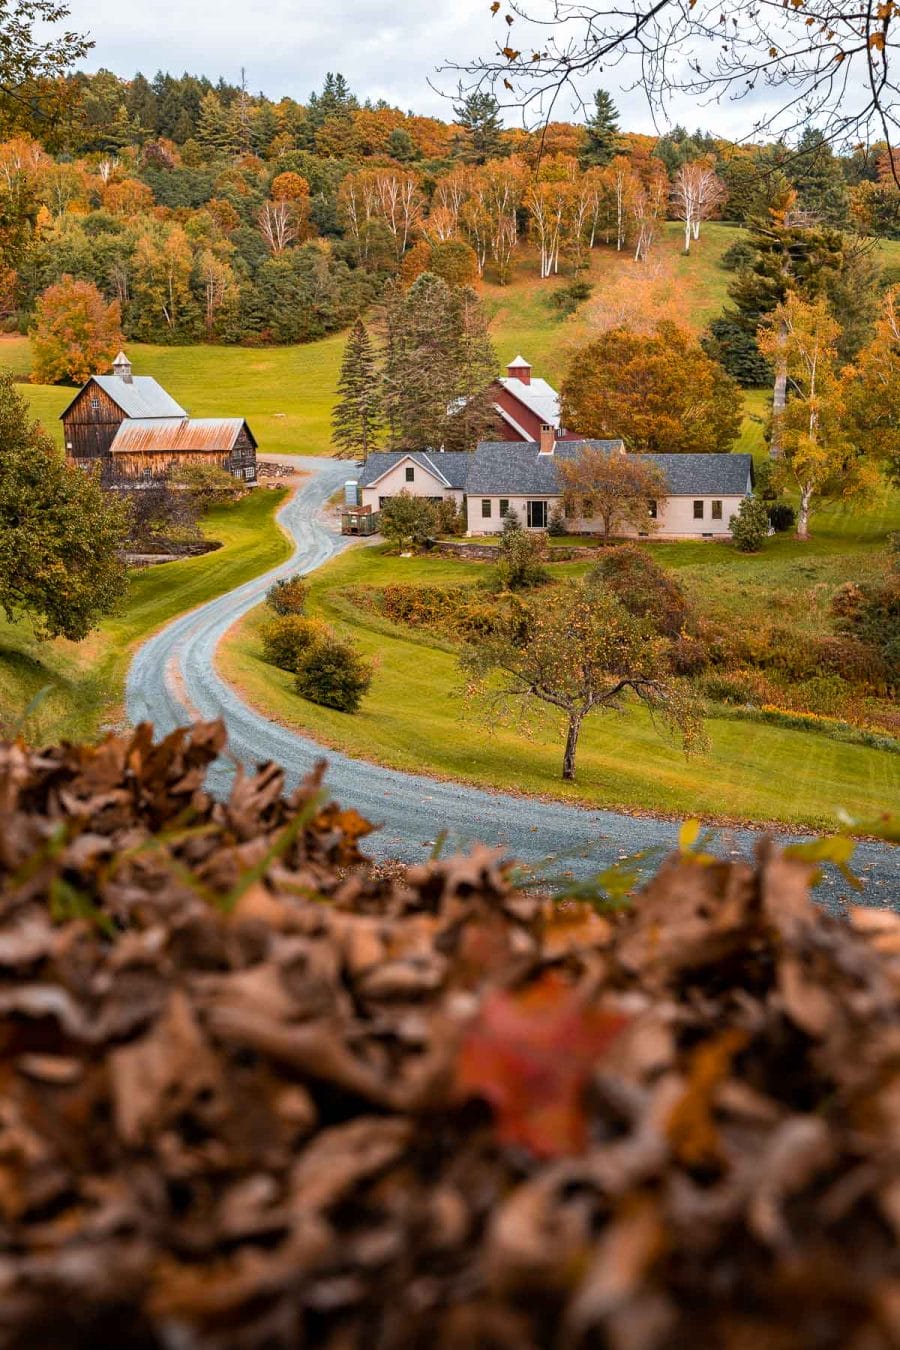 Sleepy Hollow Farm in Woodstock Vermont in the fall